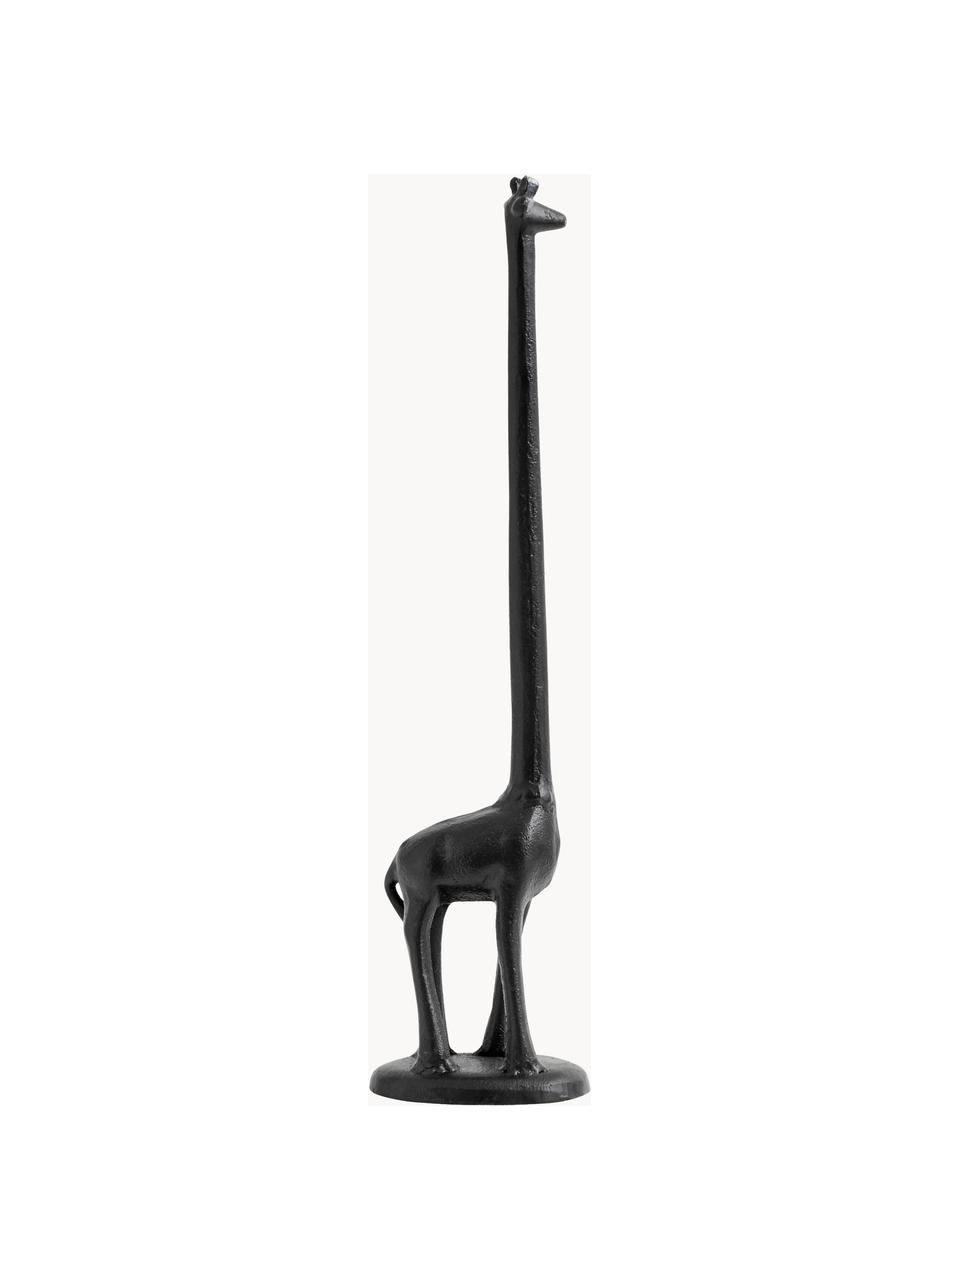 Metall-Küchenrollenhalter Wild Life in Giraffe-Form, Metall, lackiert, Schwarz, B 11 x H 46 cm